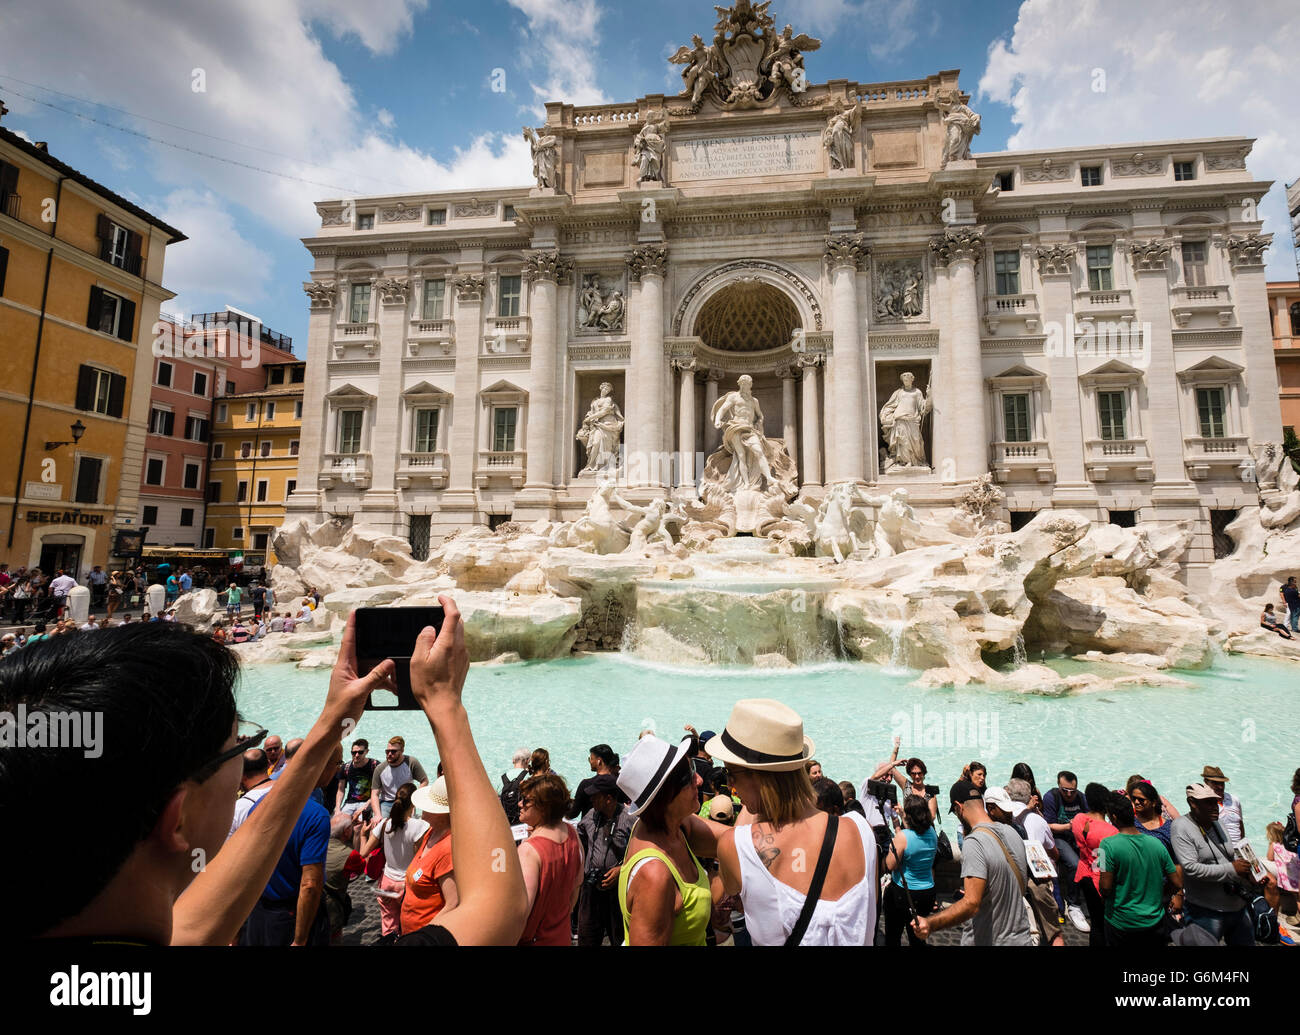 Trevi Fountain or Fontana di Trevia with many tourists in Rome Italy Stock Photo